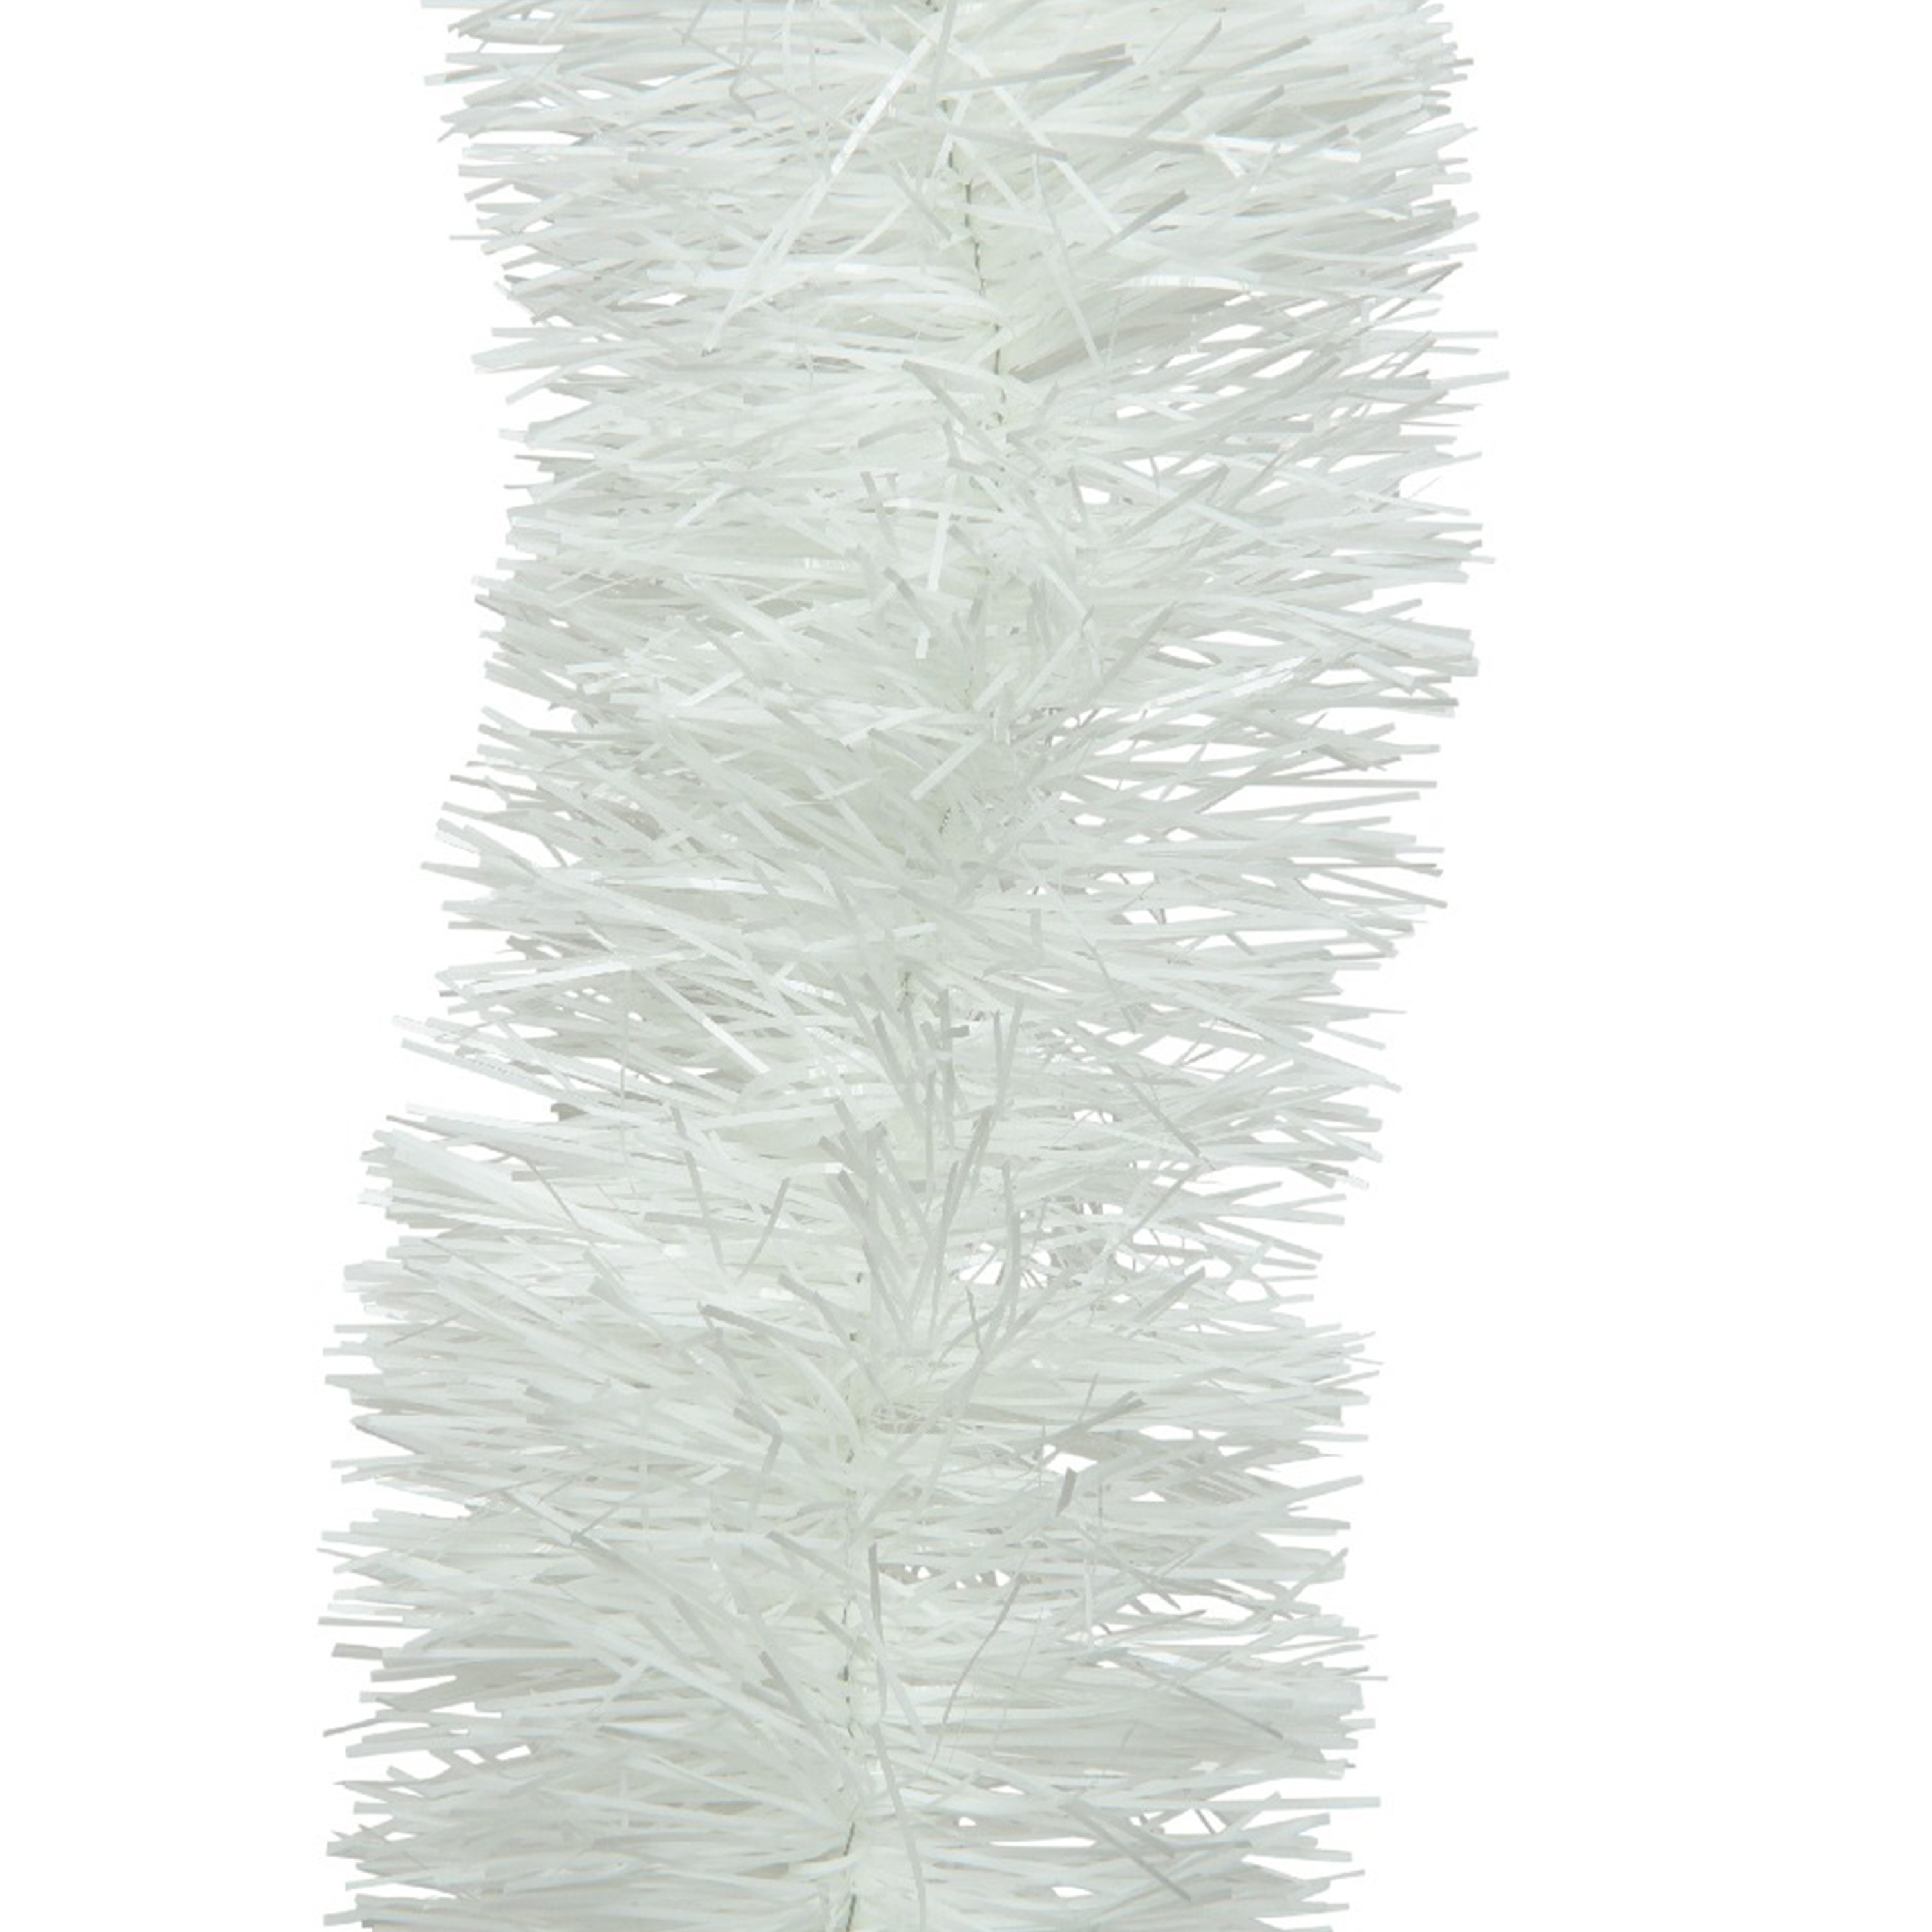 1x Feestversiering folie slingers winter wit 10 cm breed x 270 cm kunststof-plastic kerstversiering